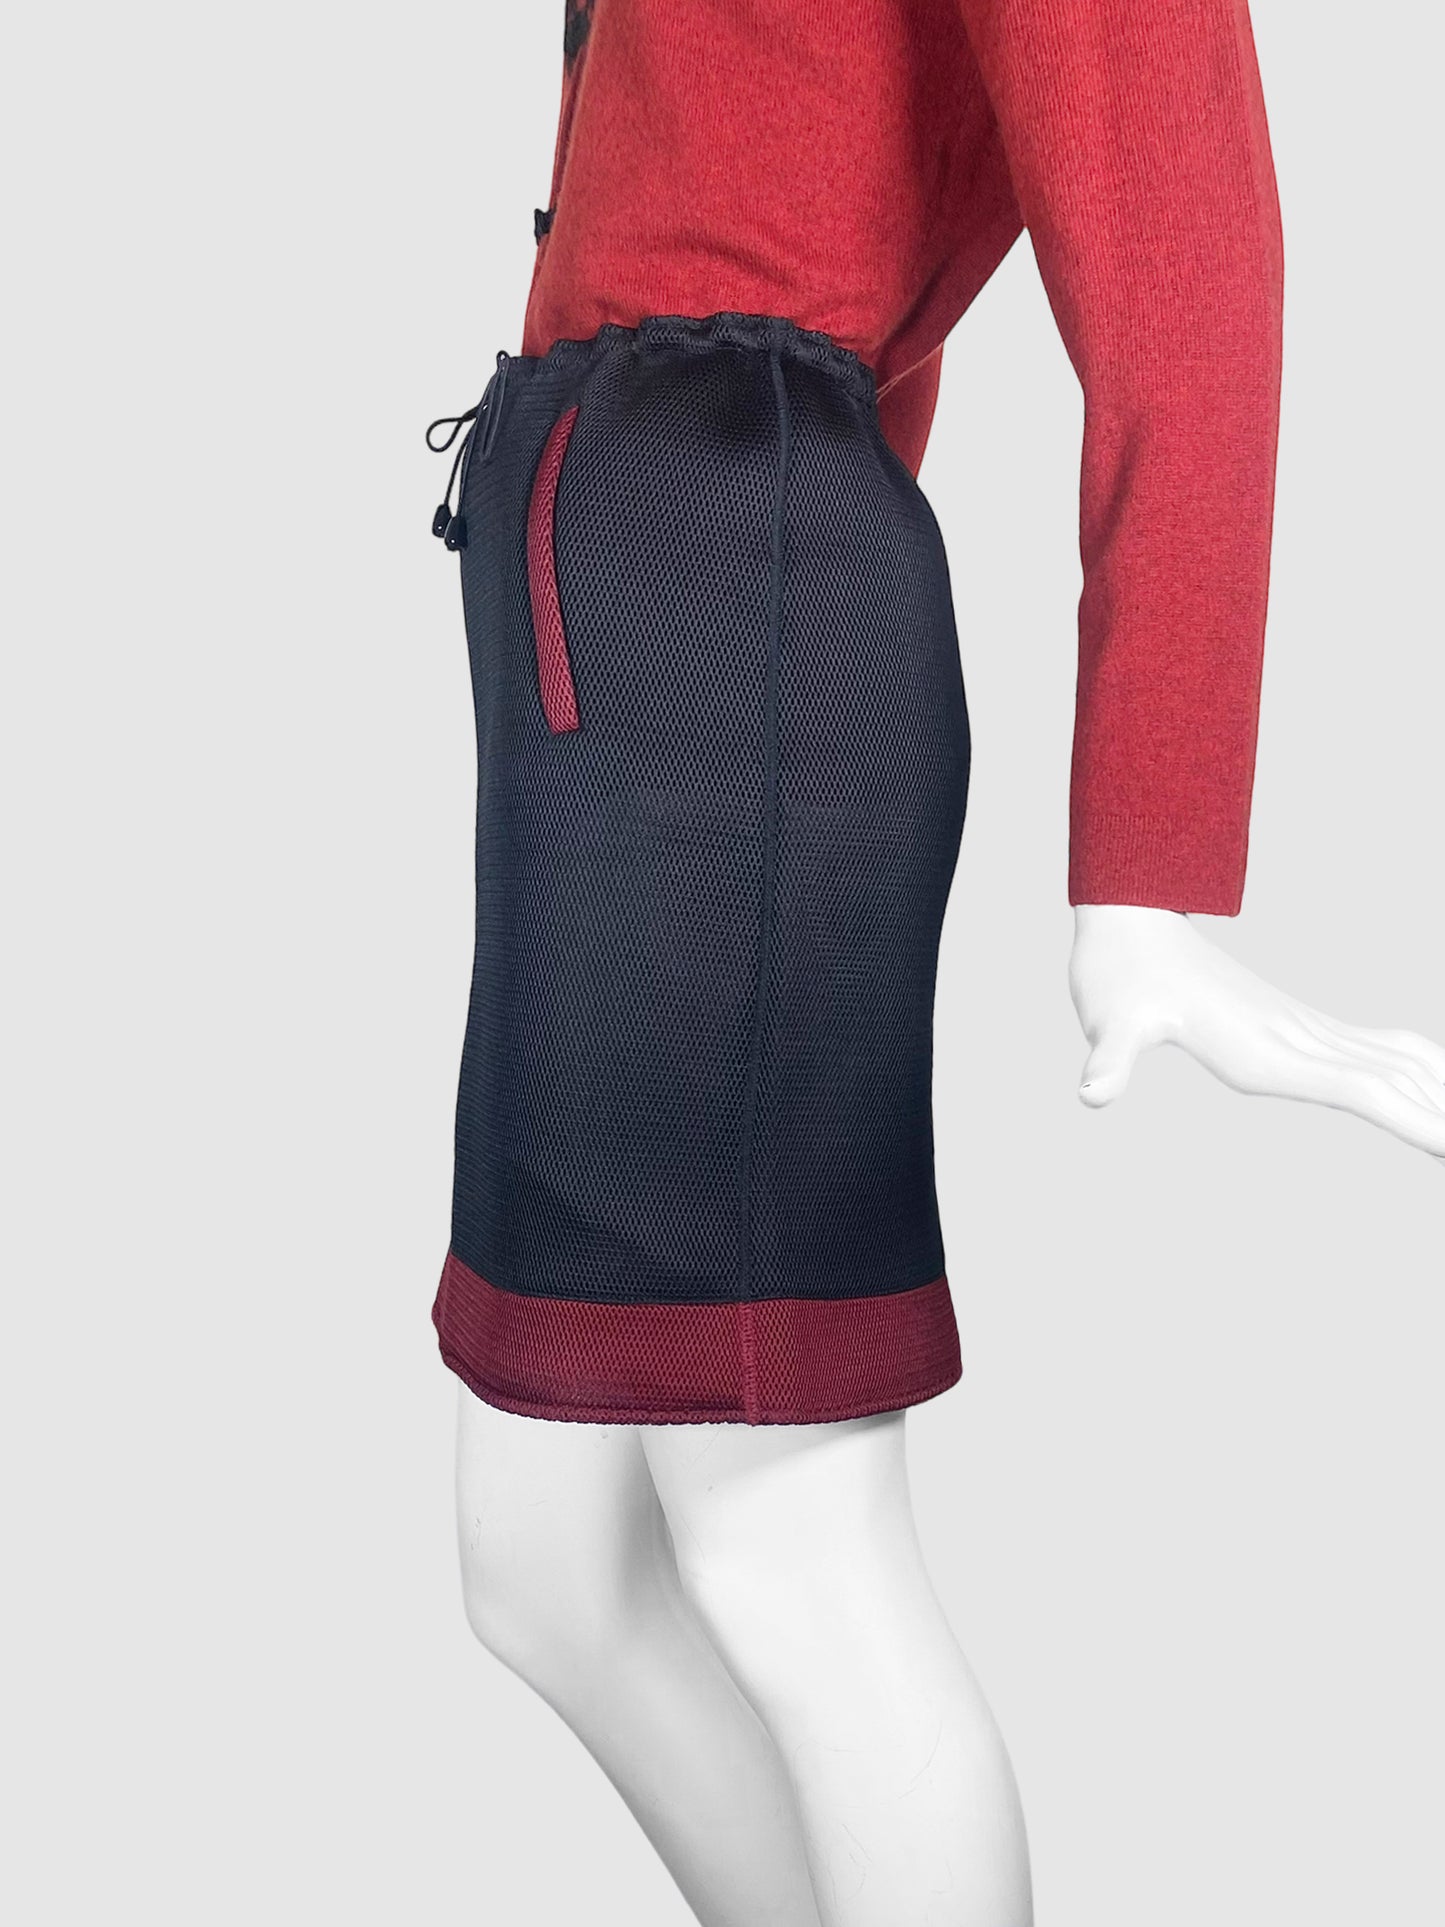 Miu Miu Burgundy Trim Mini Skirt - Size M